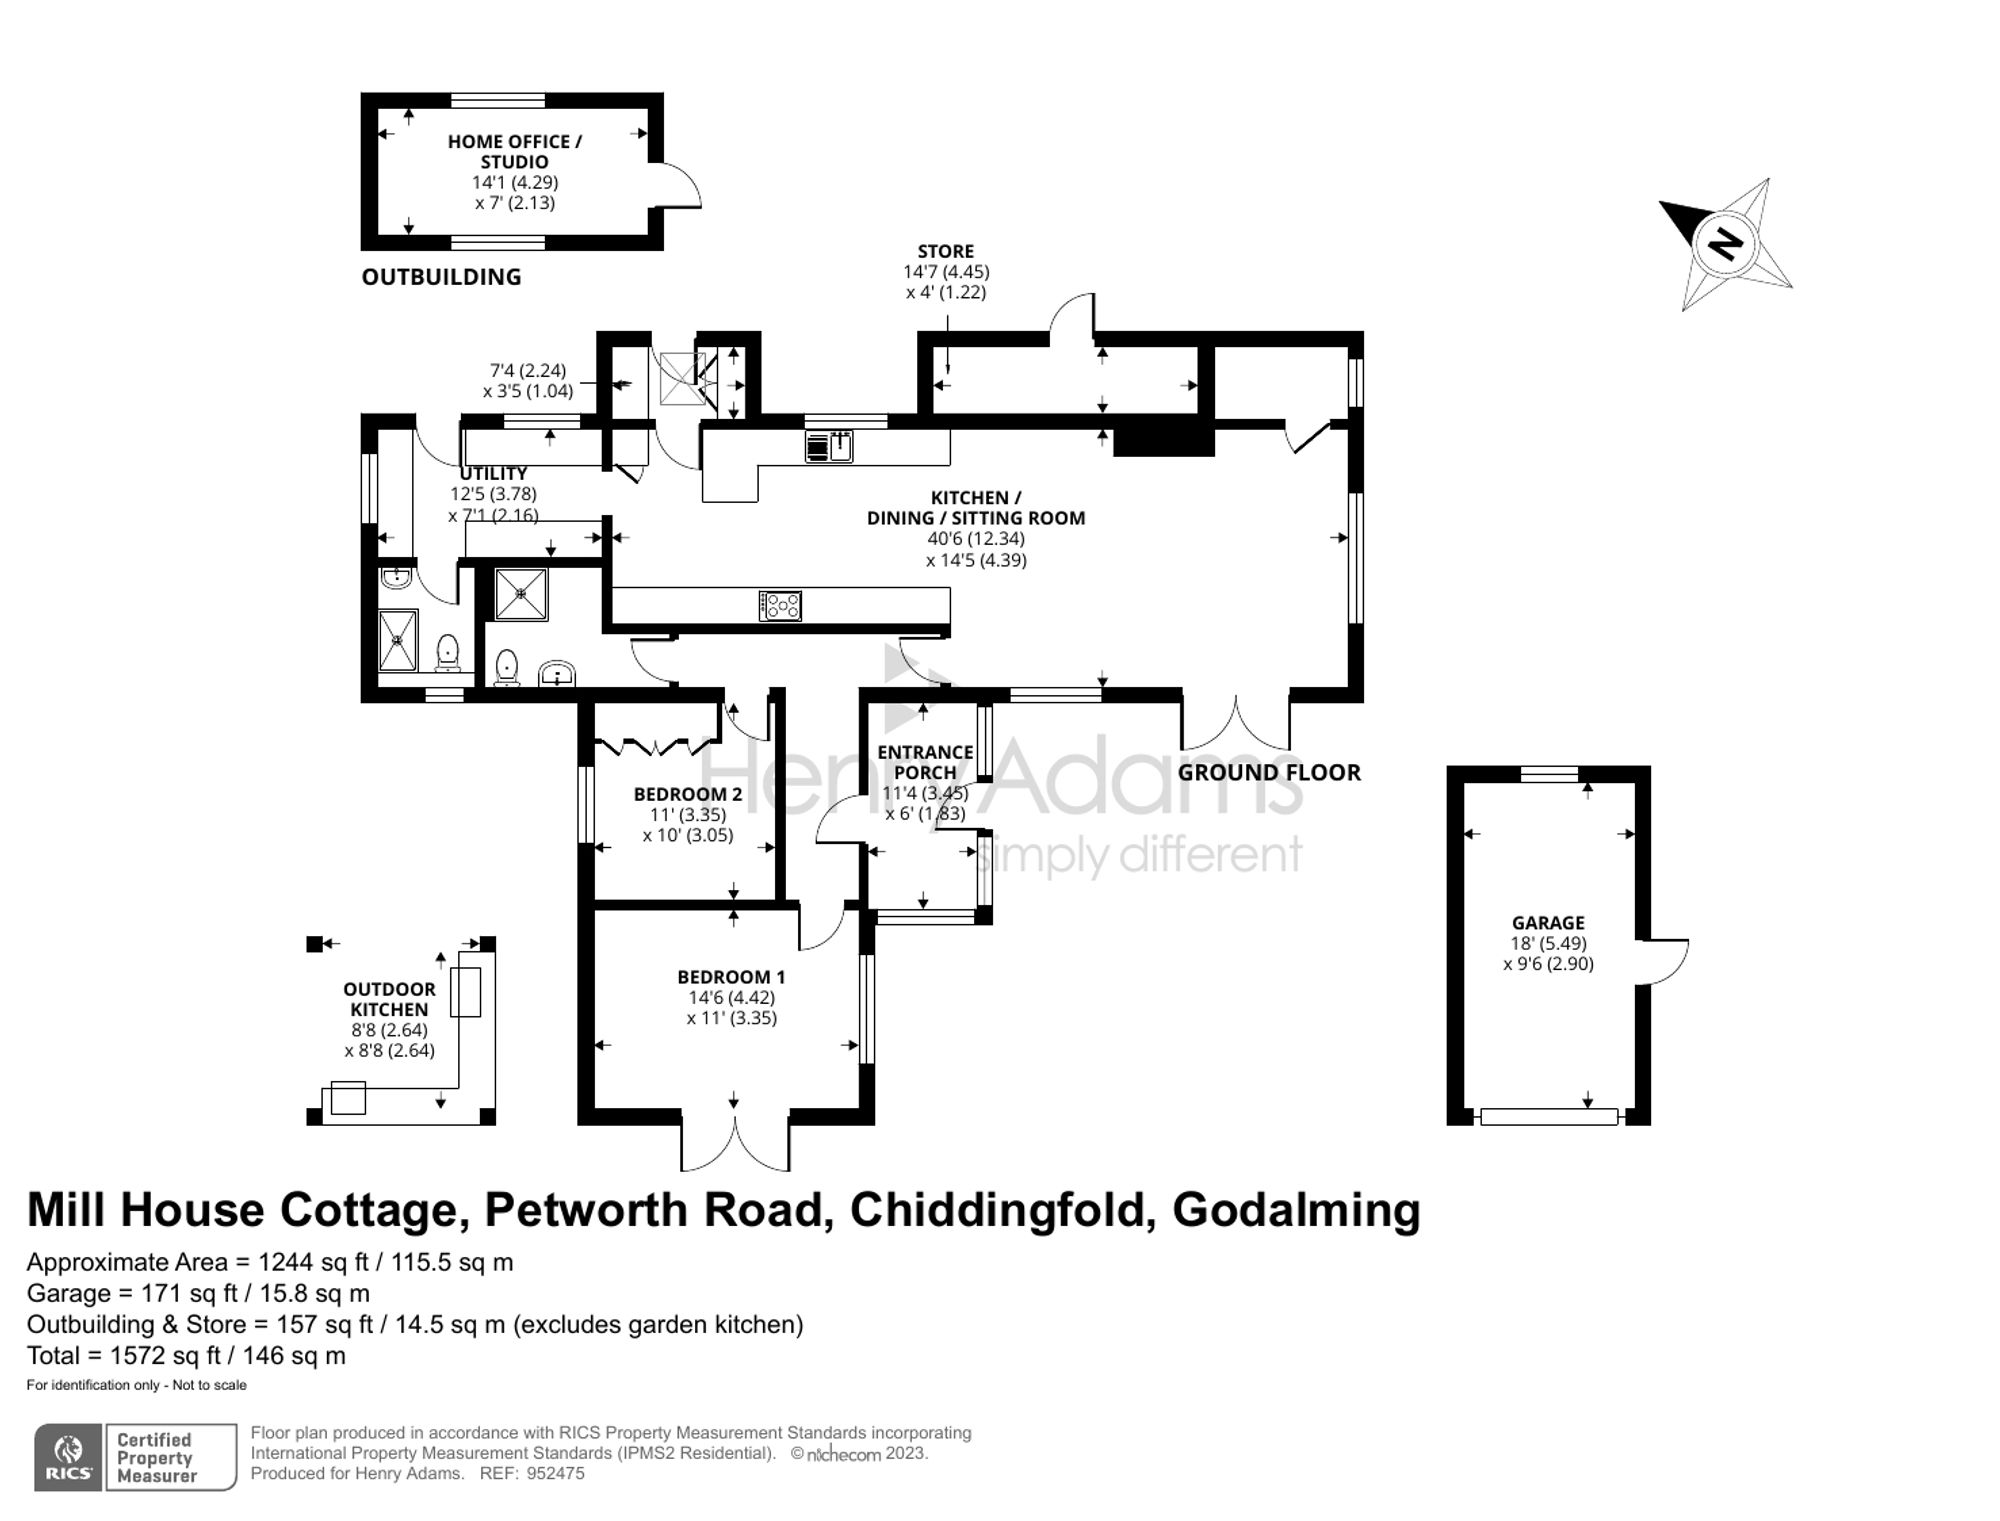 Petworth Road, Chiddingfold, GU8 floorplans